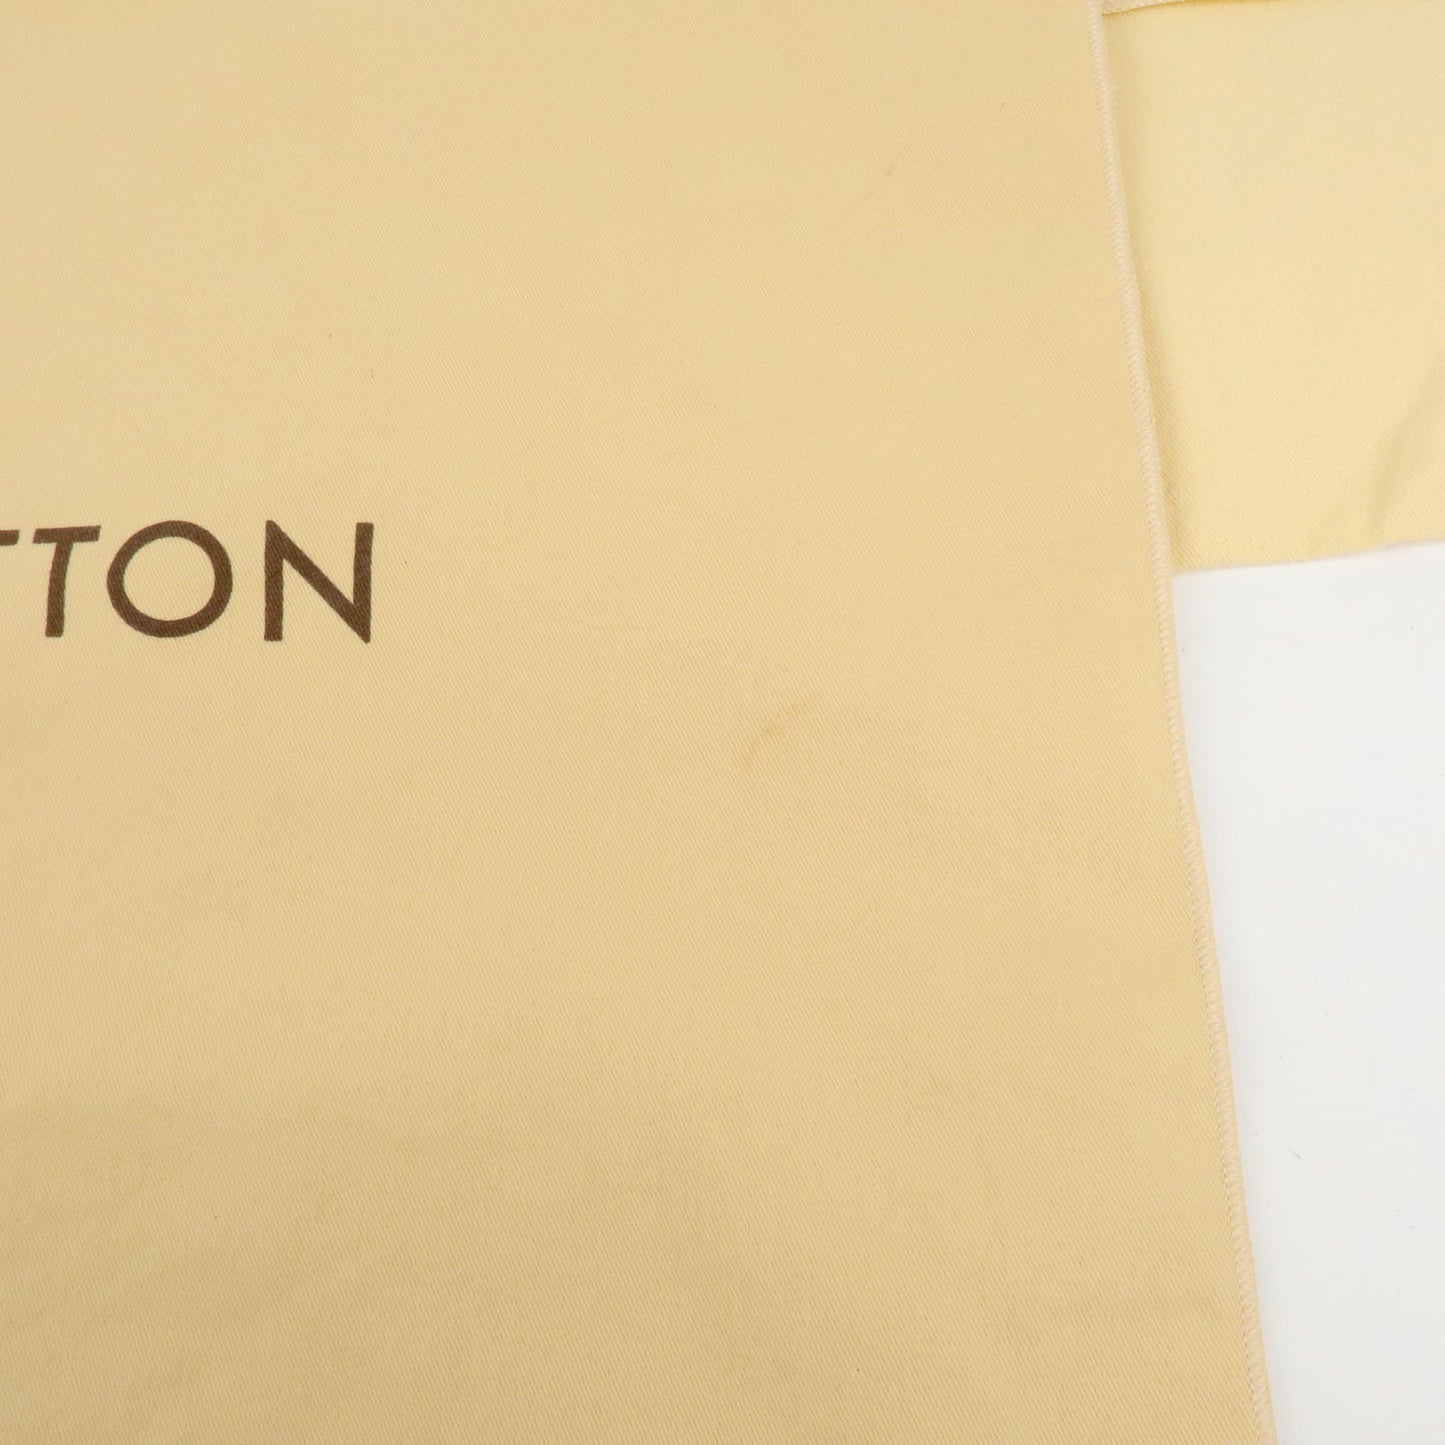 Louis-Vuitton-Dust-Bag-Set-of-10-(Flap-Type-16,-Drawstring-4)-Beige-Brown –  dct-ep_vintage luxury Store